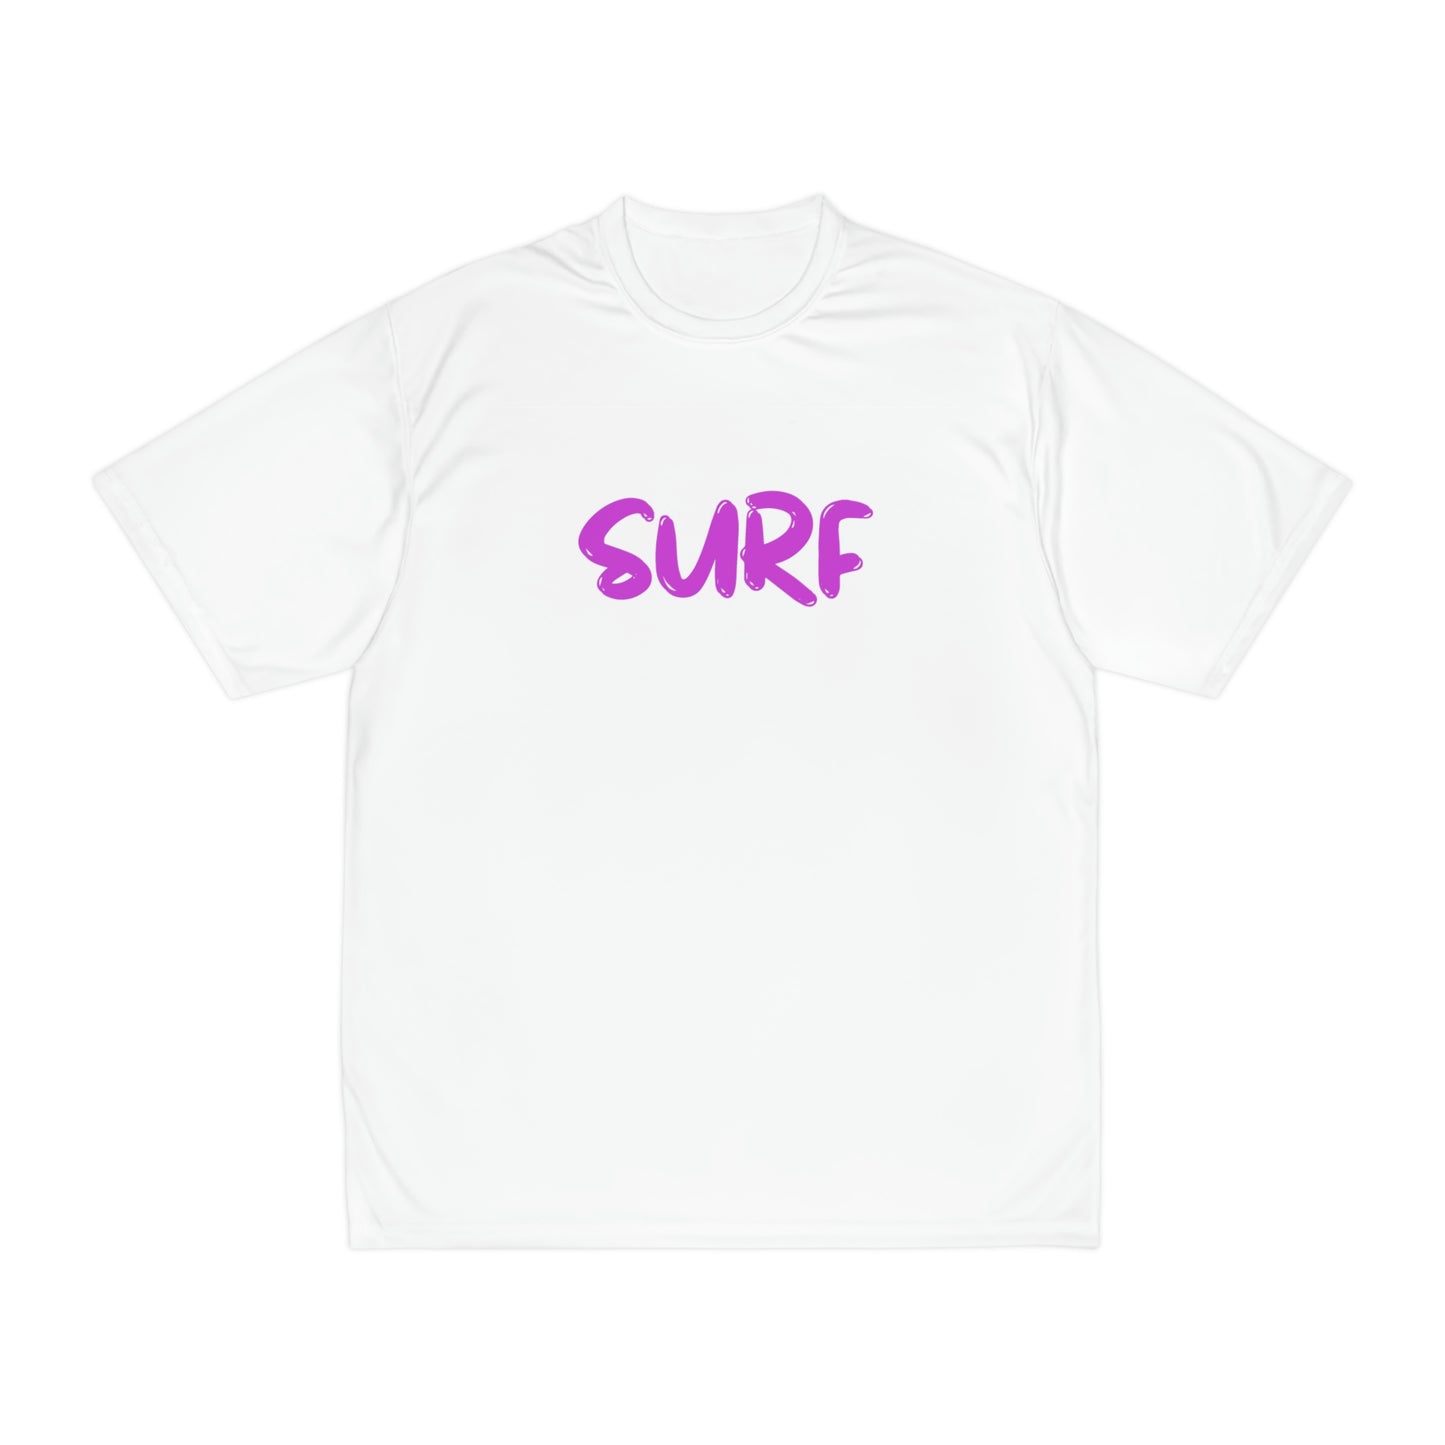 SURF - Men's Performance T-Shirt